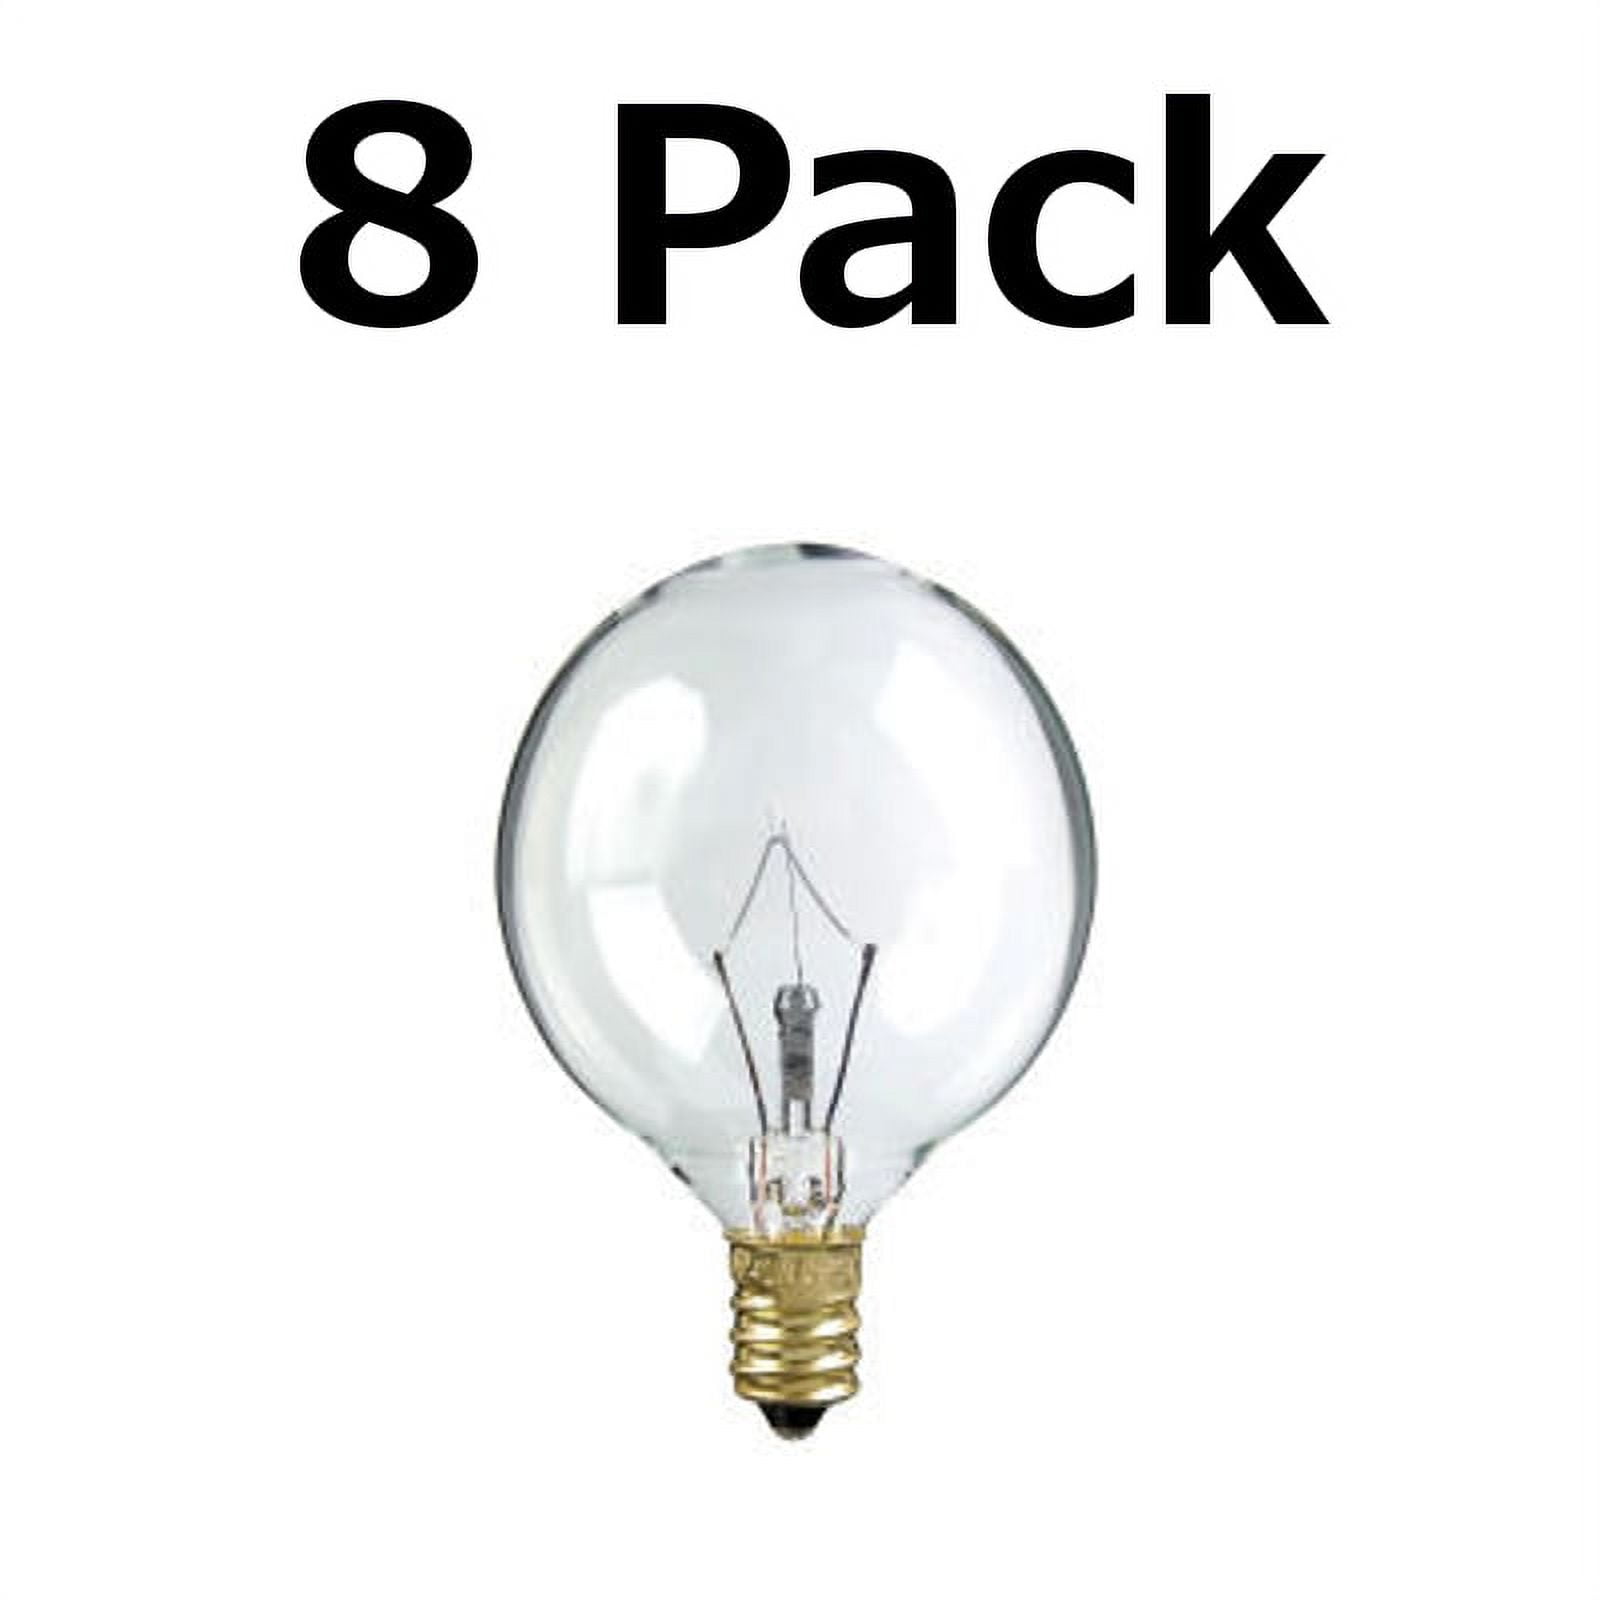 8 Pack Light Bulb for Large Scentsy Wax Diffusers/Tart Warmers, 25 Watt 130  Volt 